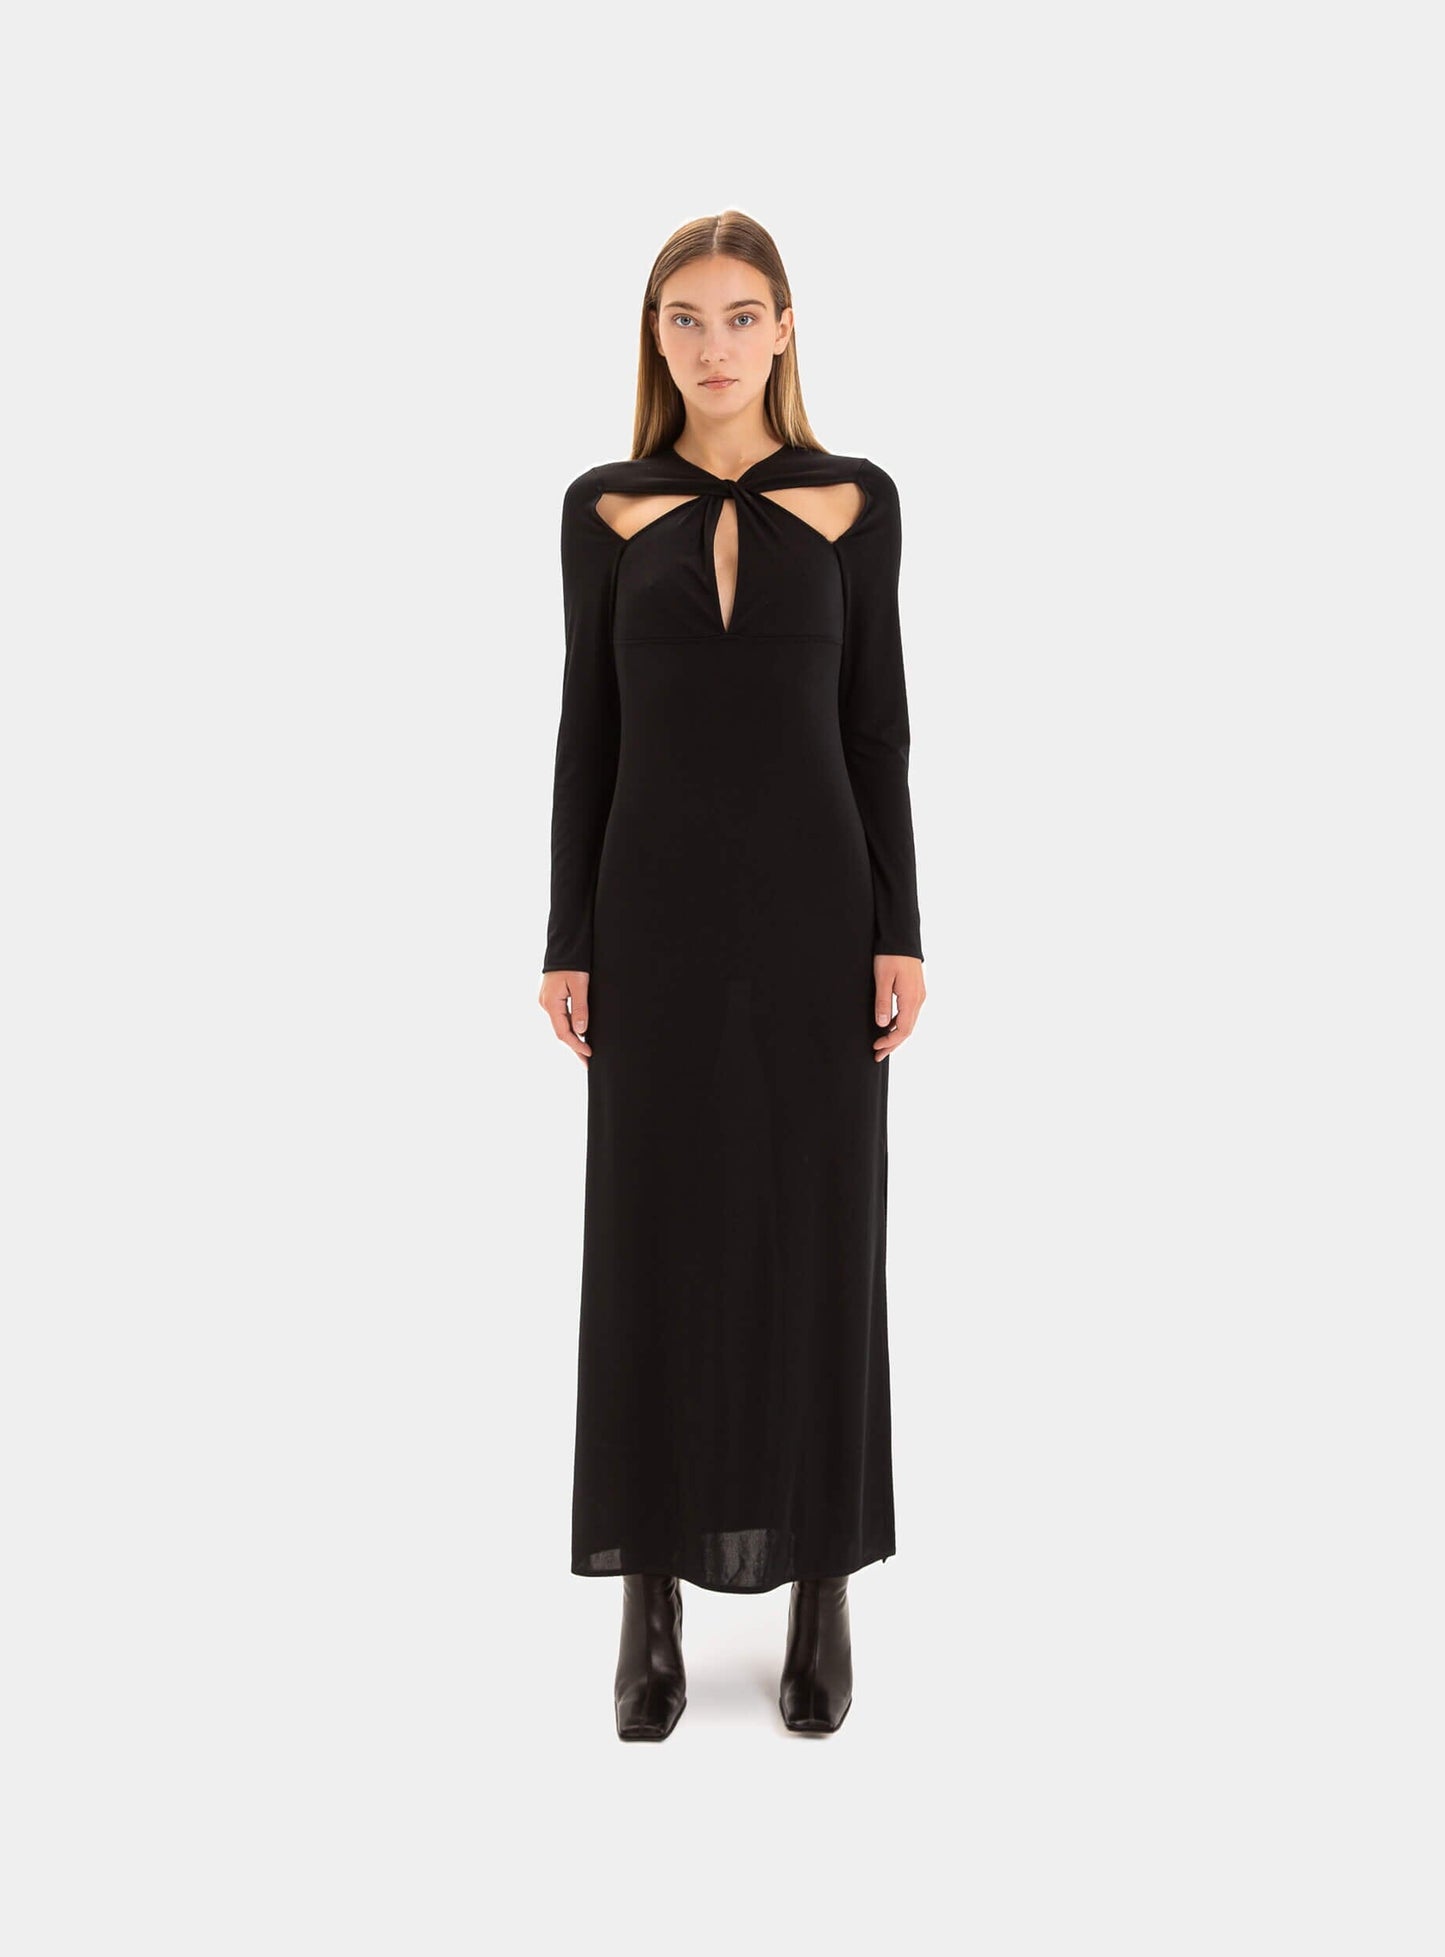 ALEXANDRA BLACK STRETCH DRESS